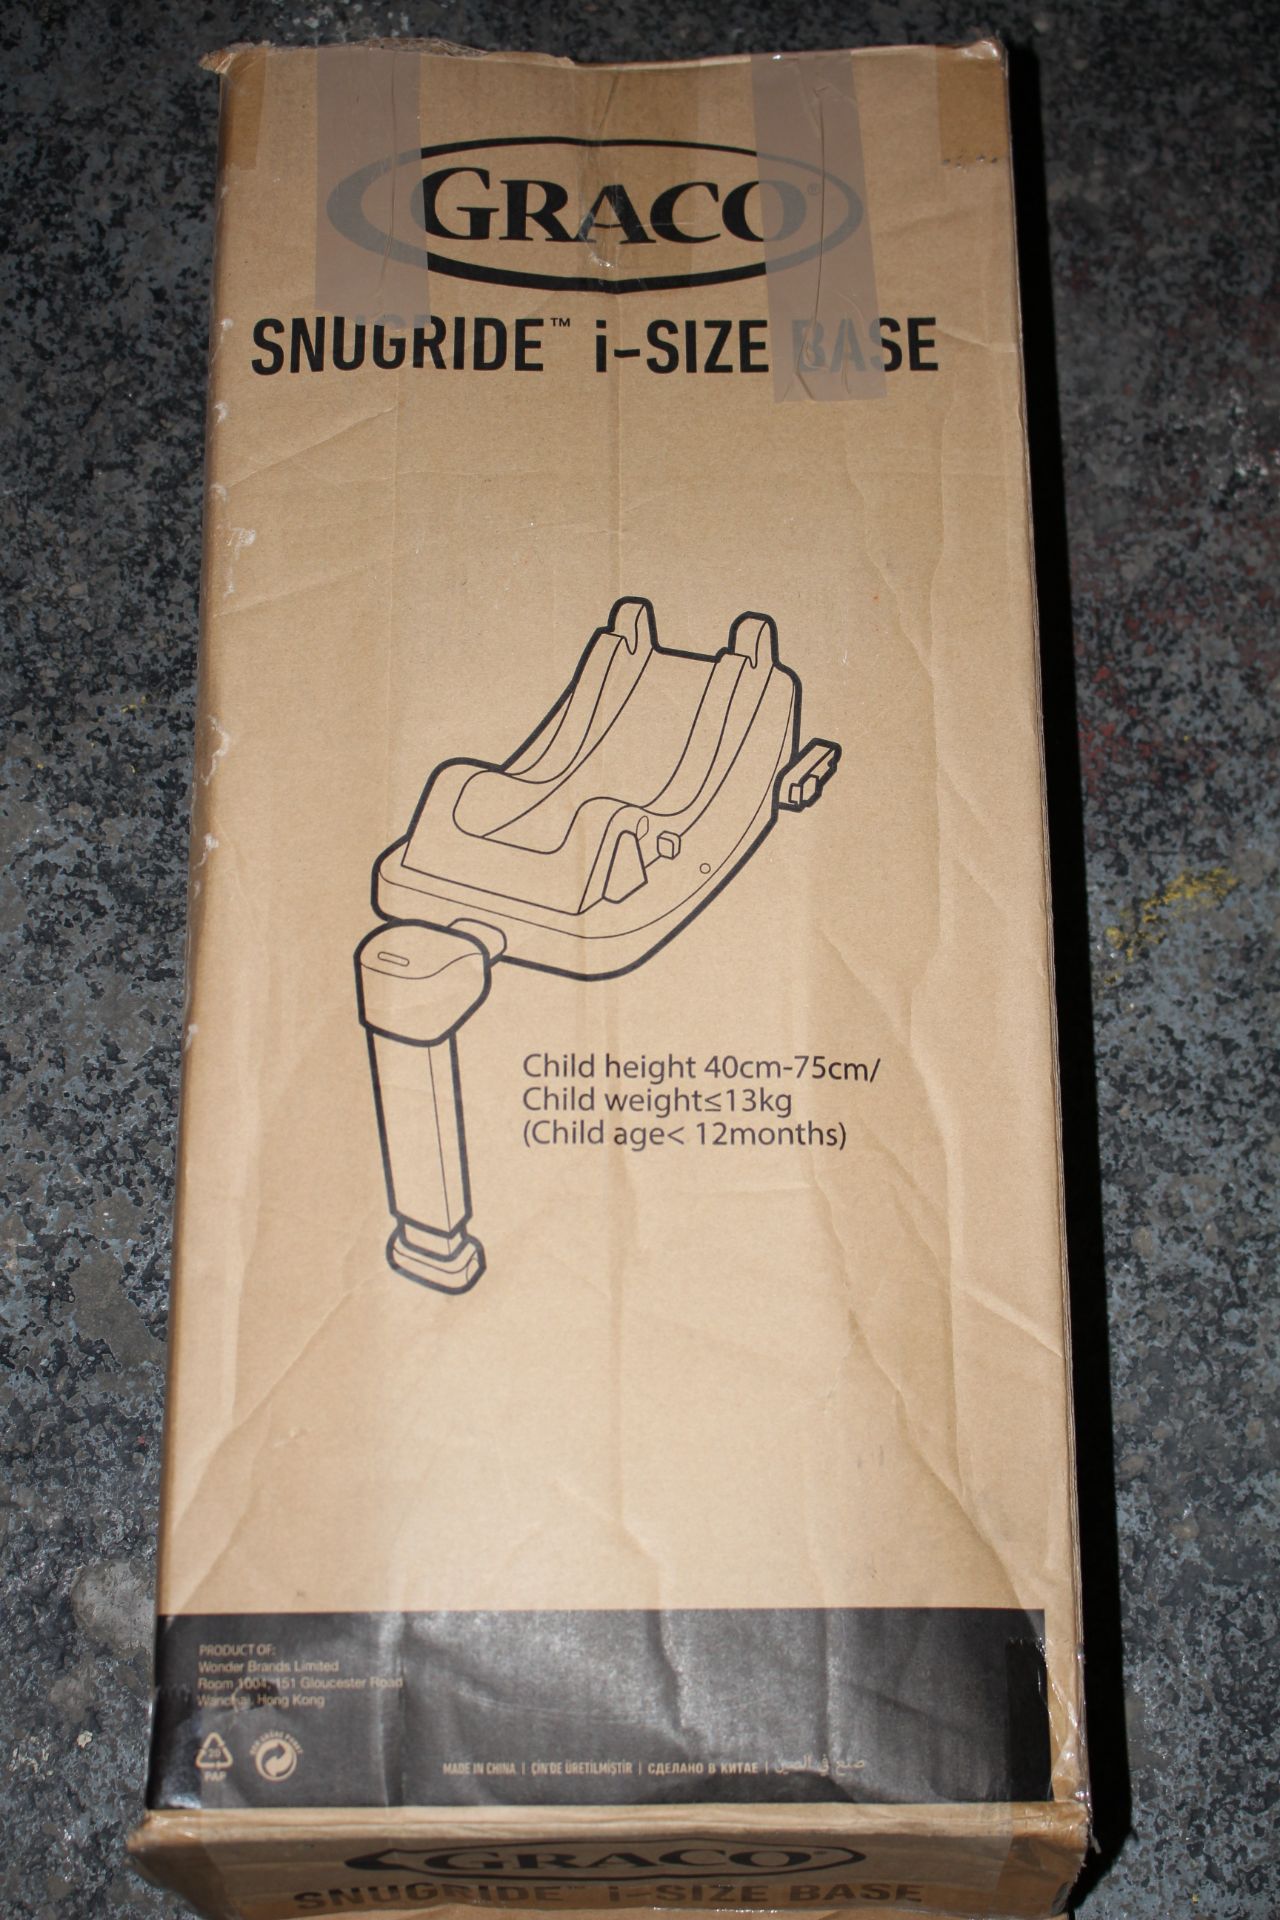 BOXED GRACO SNUGRIDE I-SIZE BASE RRP £74.95